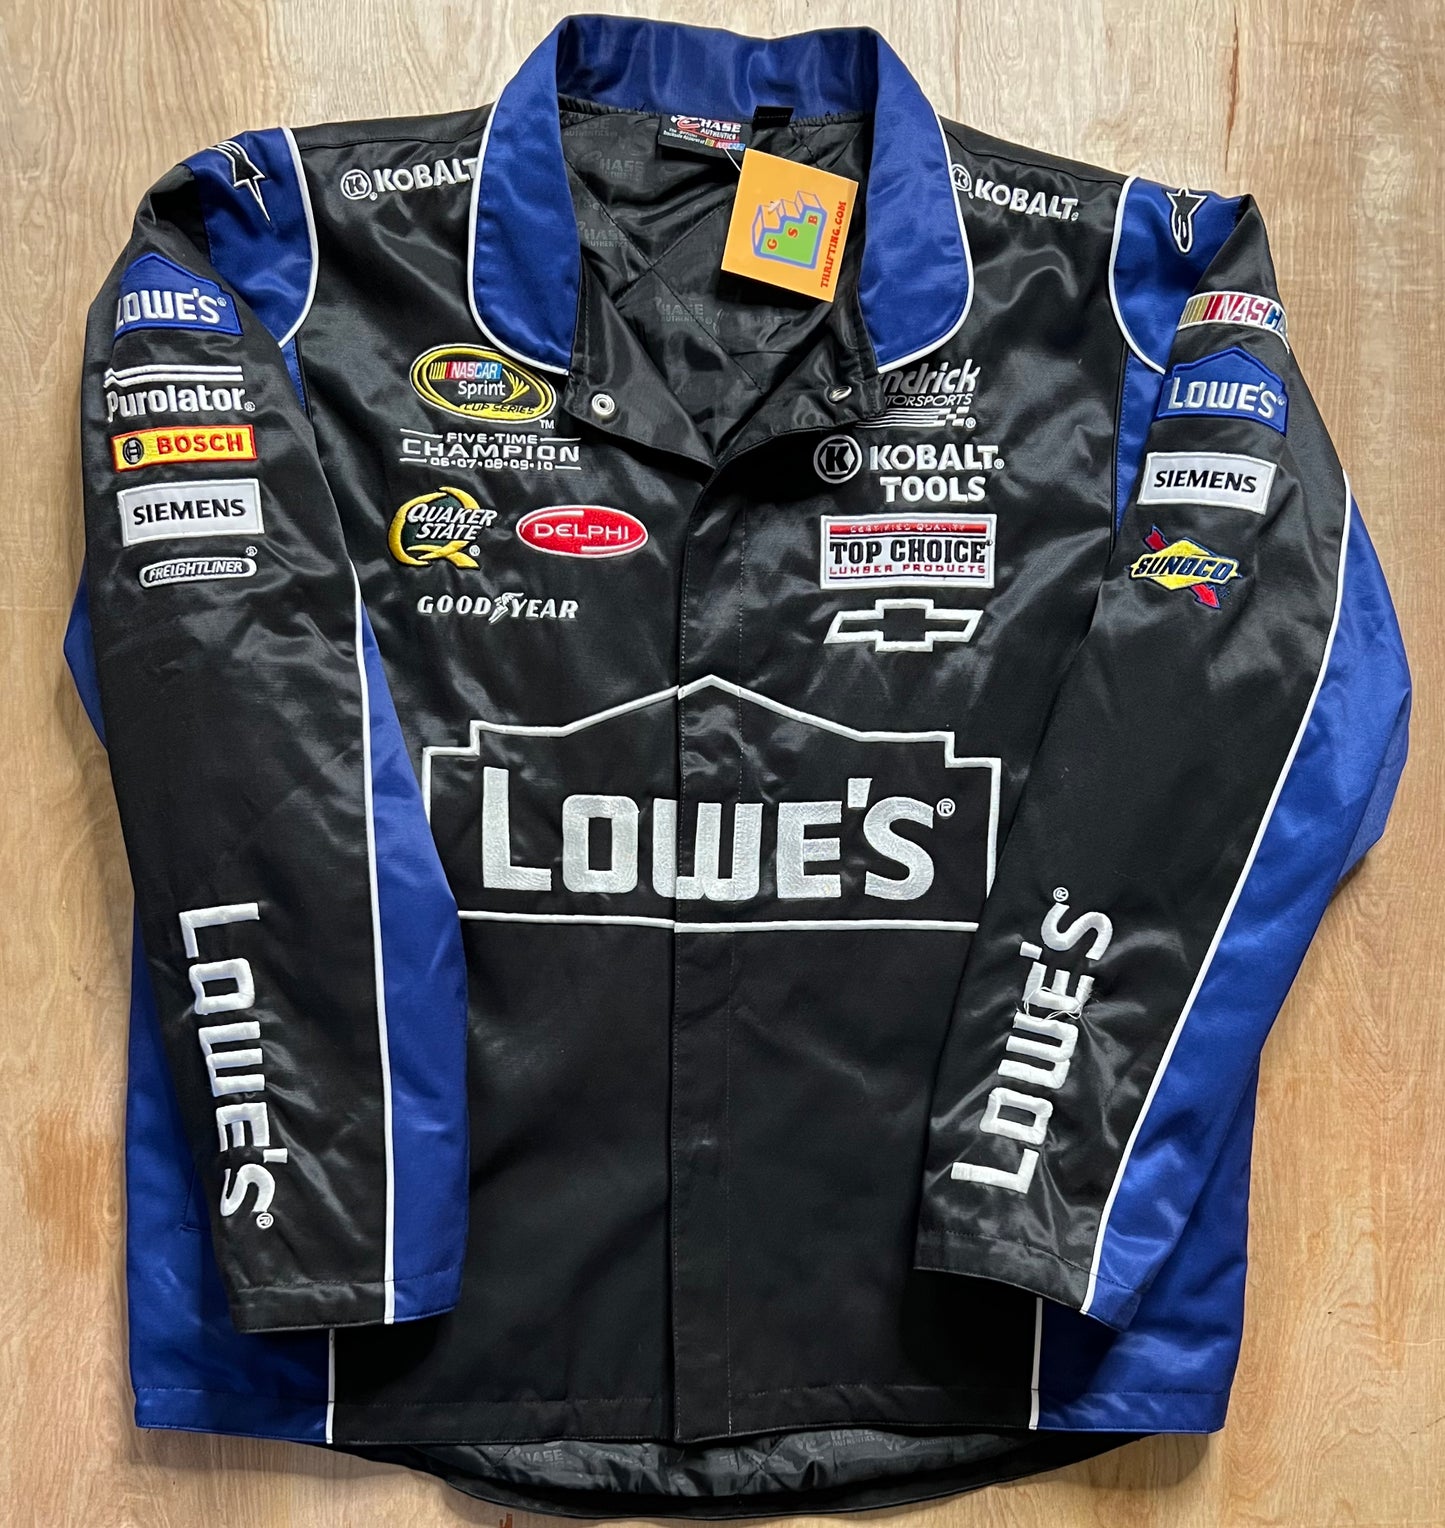 Lowe's Nascar Sprint Cup Series Racing Jacket